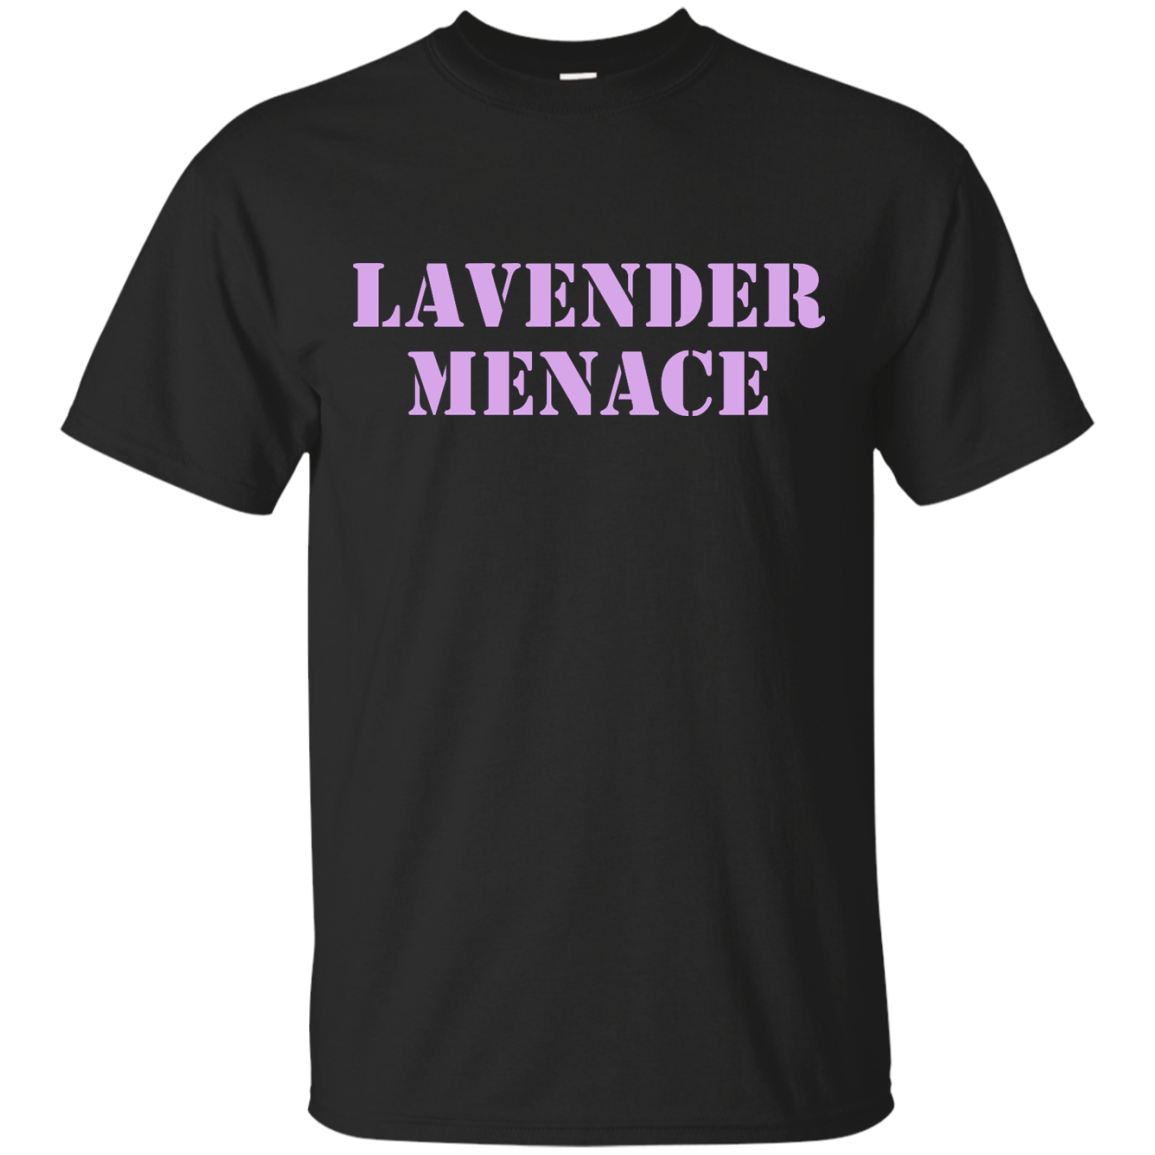 Lavender Menace shirt, sweater: LGBT history